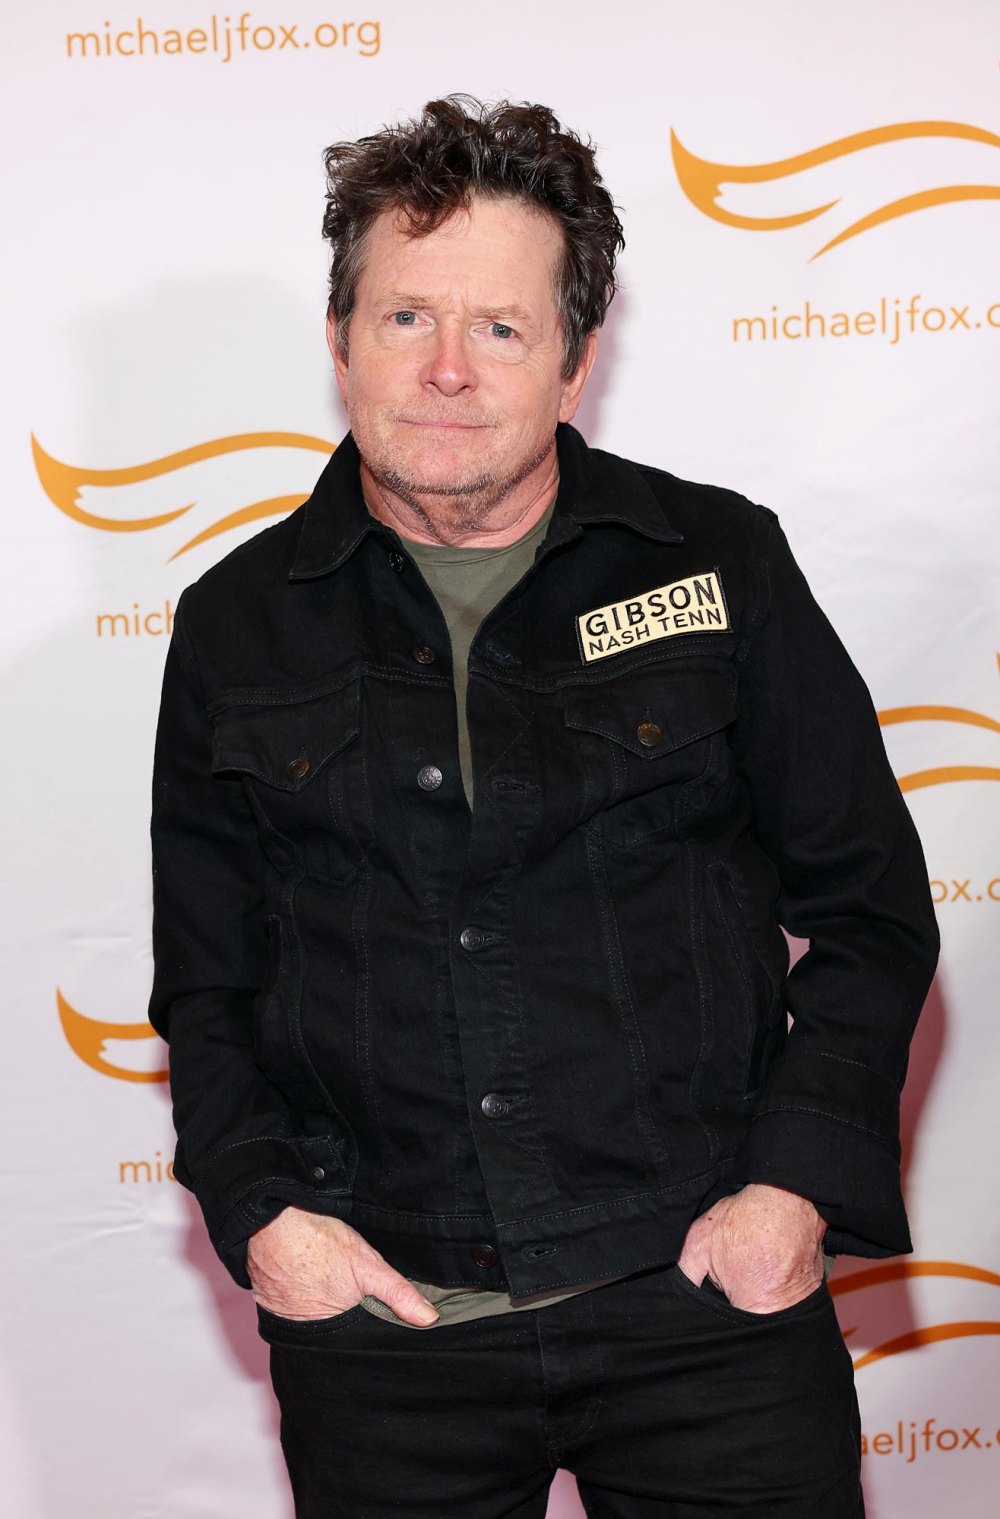 Michael J Fox Shares Health Update Amid Parkinson s Disease Battle 242